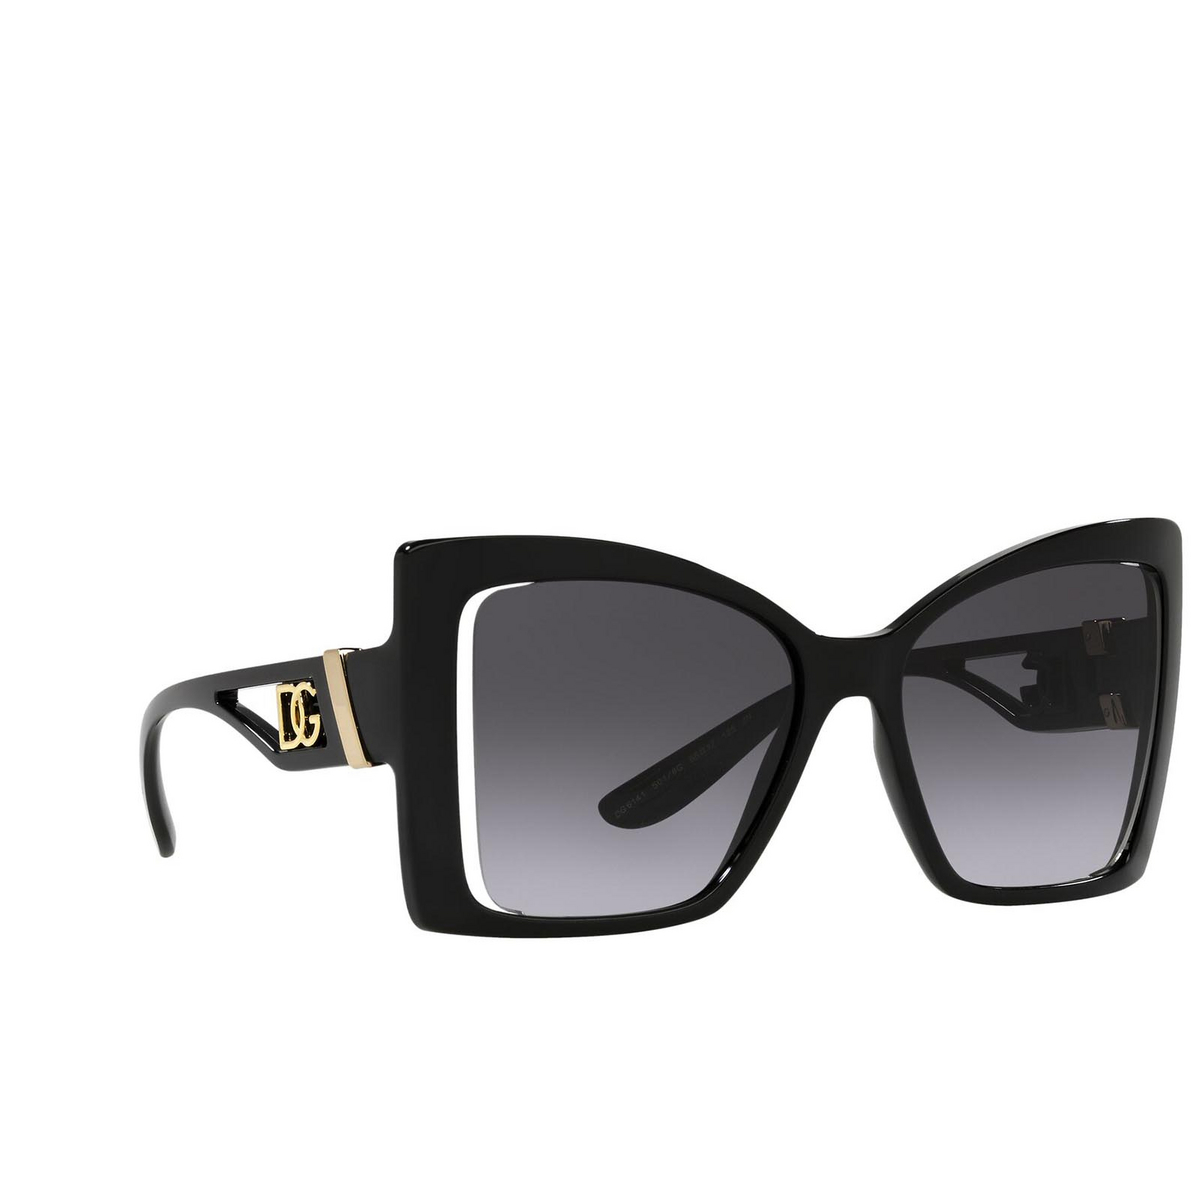 Dolce & Gabbana® Butterfly Sunglasses: DG6141 color Black 501/8G - three-quarters view.